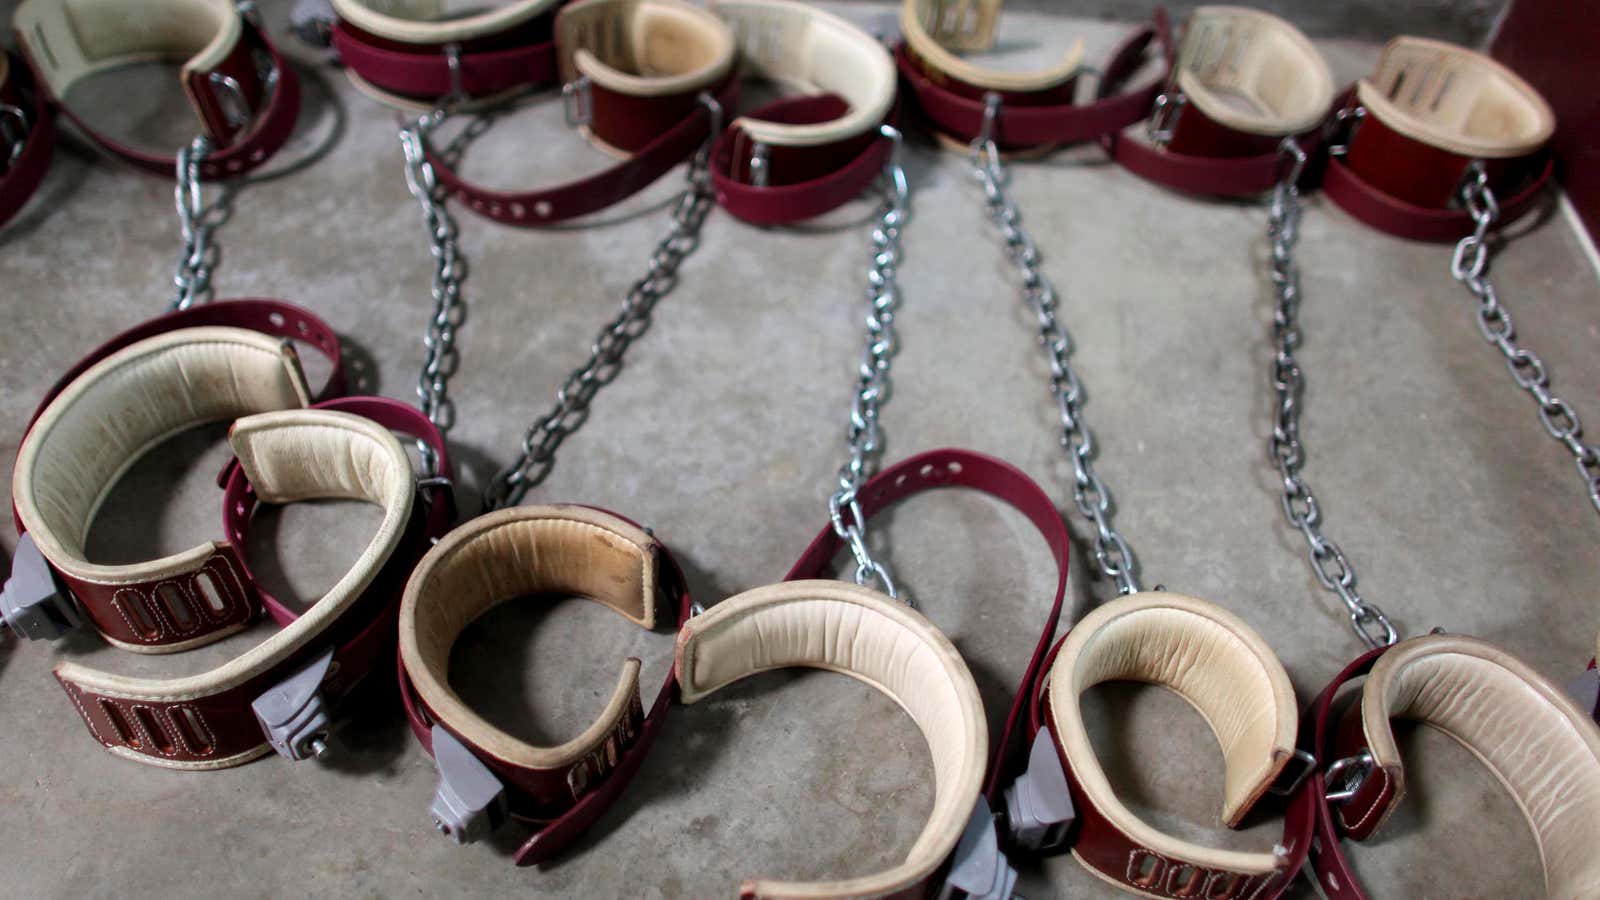 Leg shackles used at US detention facility in Guantanamo Bay